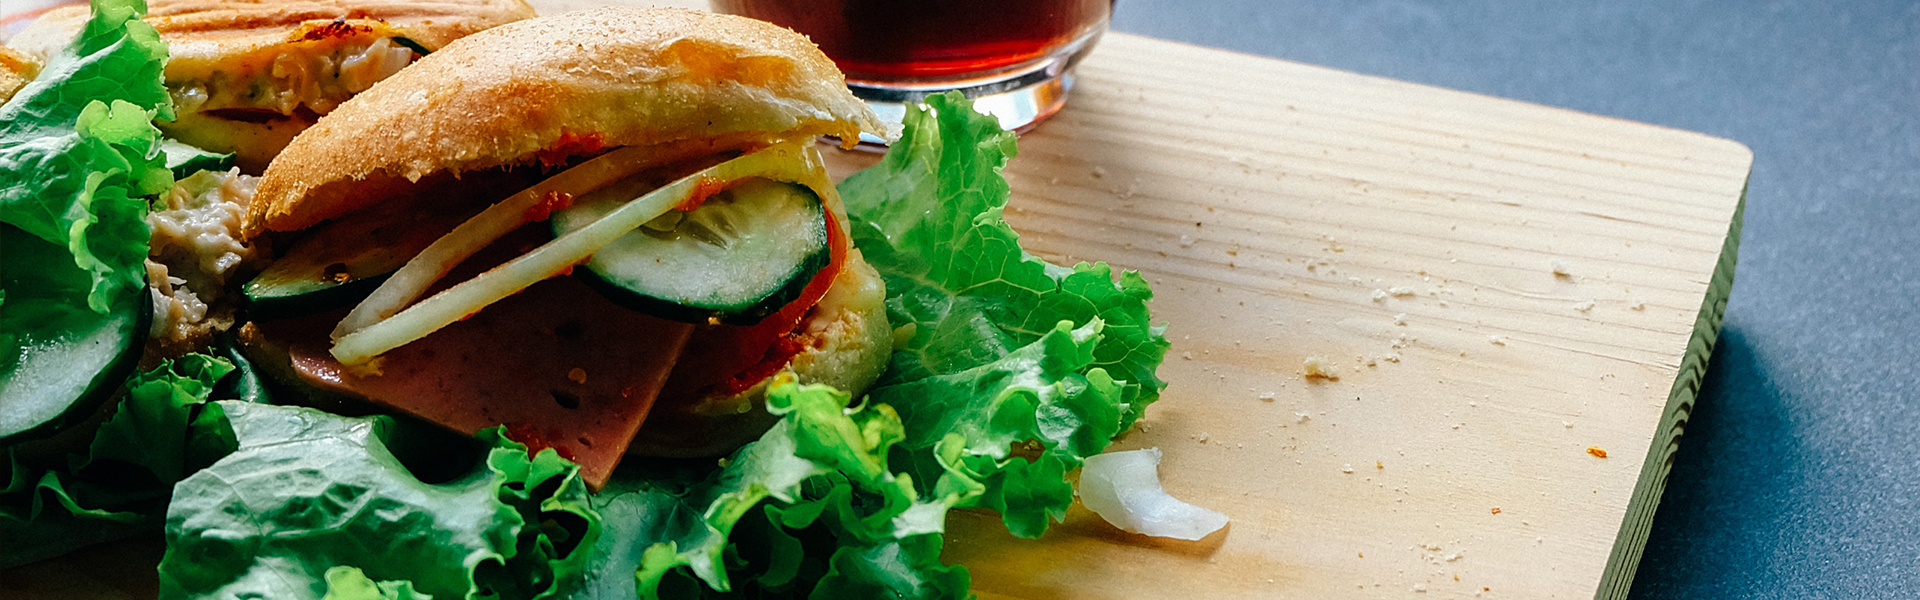 Healthy sandwich meal on cutting board.